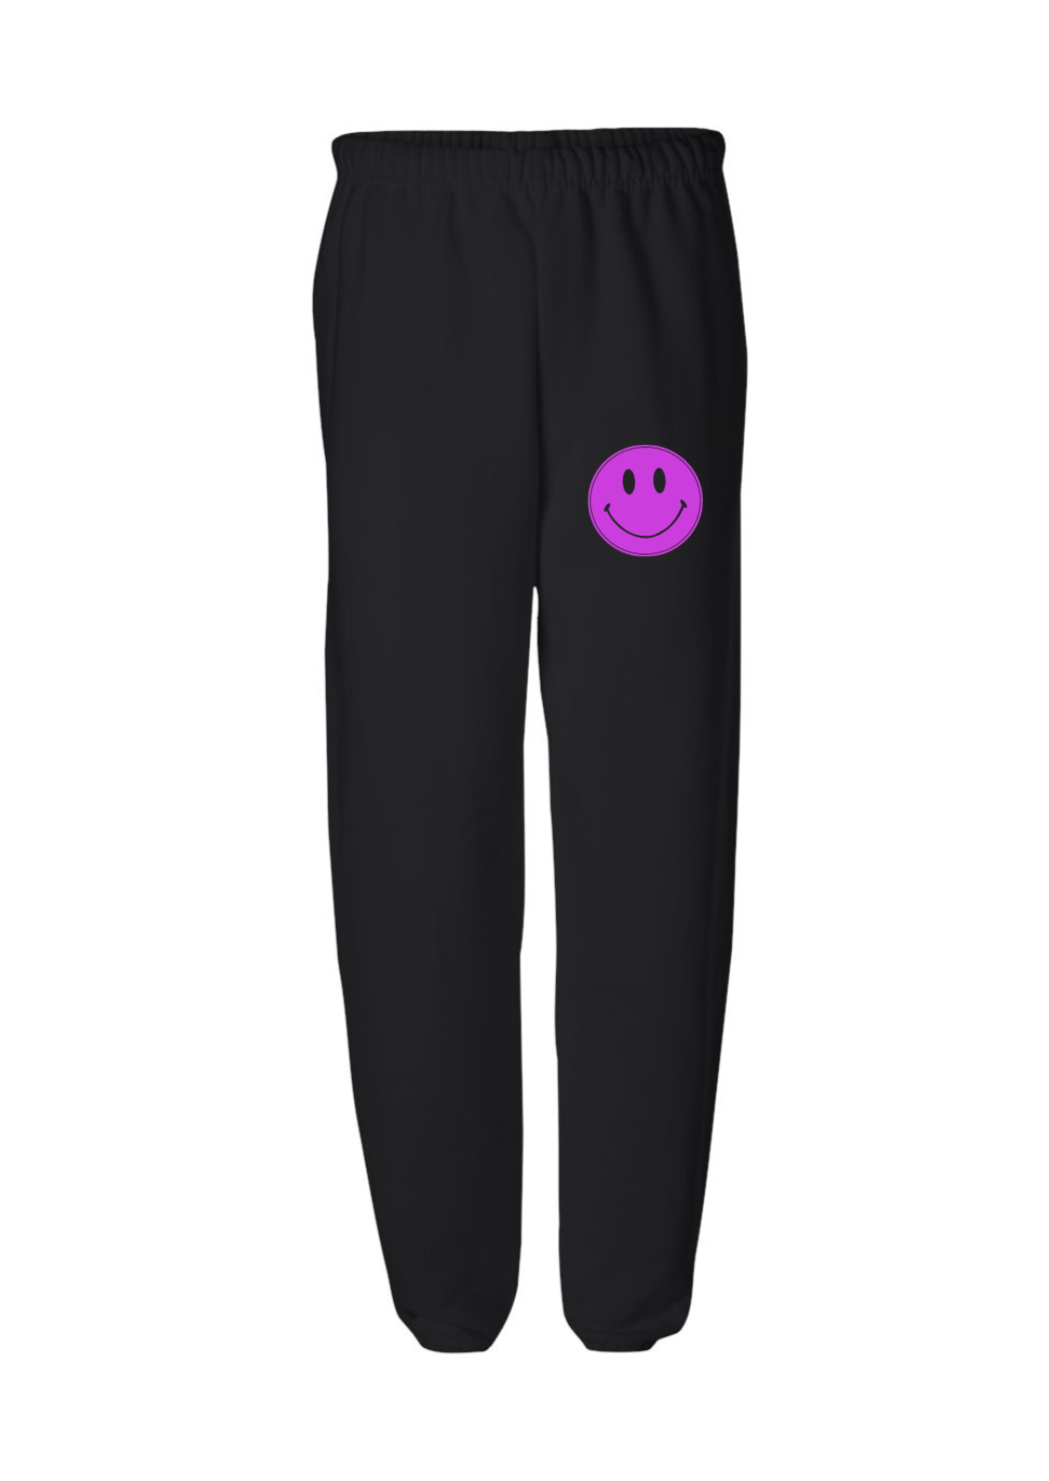 black+purple smiley jogger style sweatpants